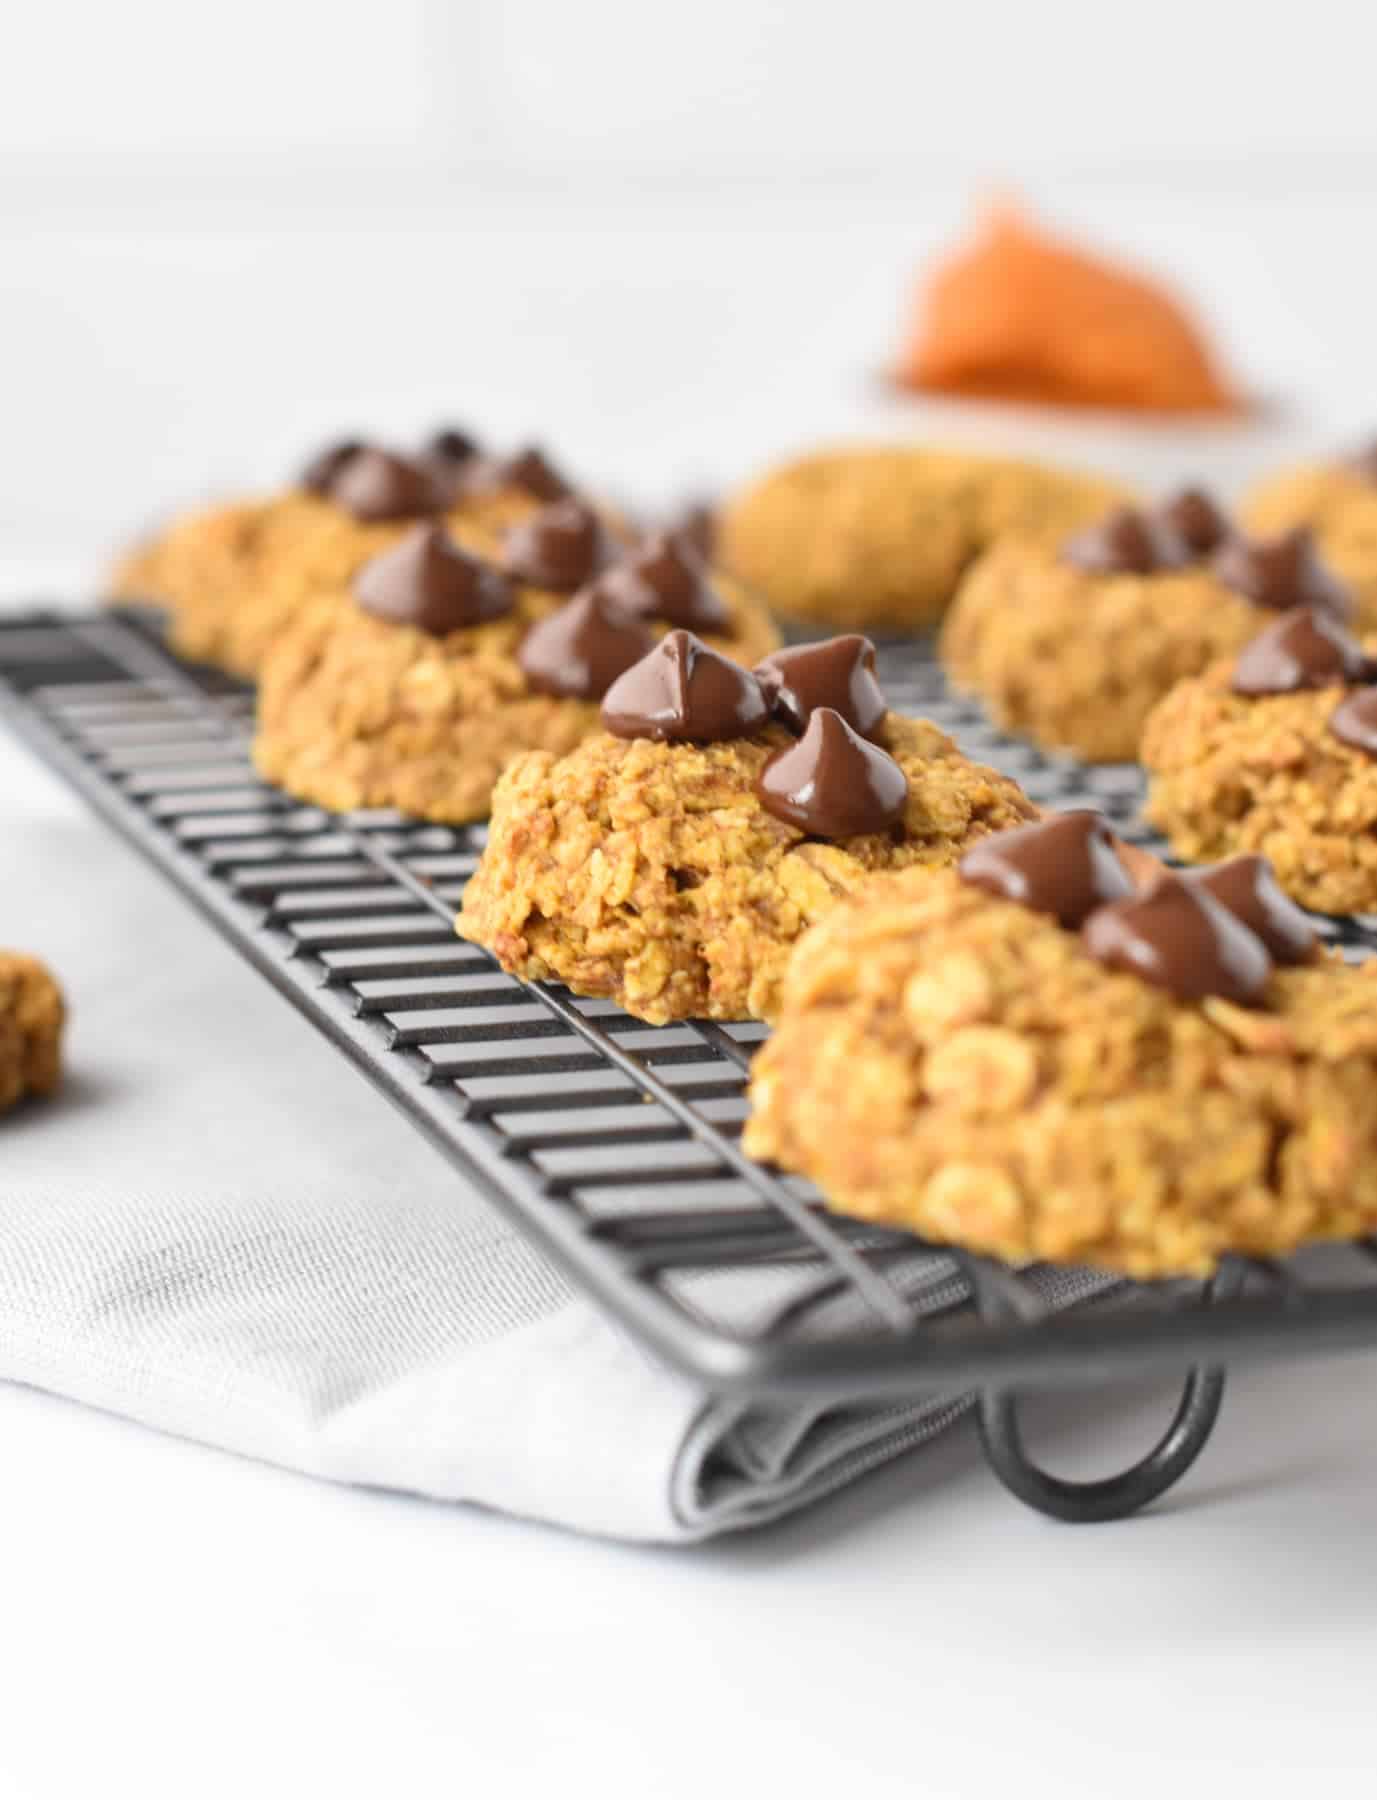 pumpkin oatmeal cookies